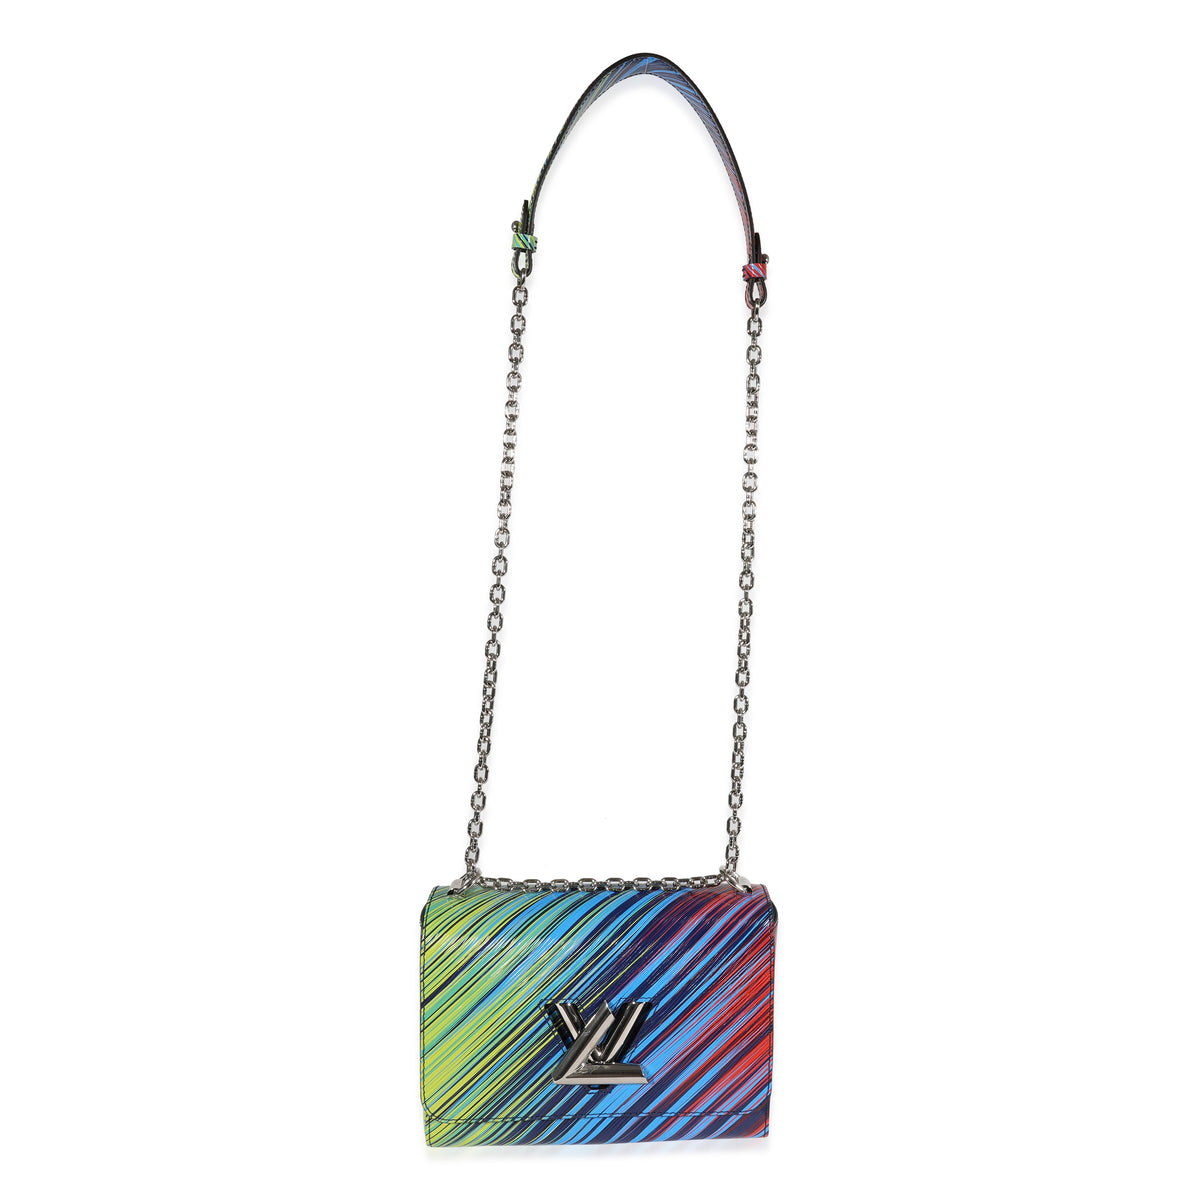 Louis Vuitton Twist Handbag Epi Leather with Iridescent Hardware